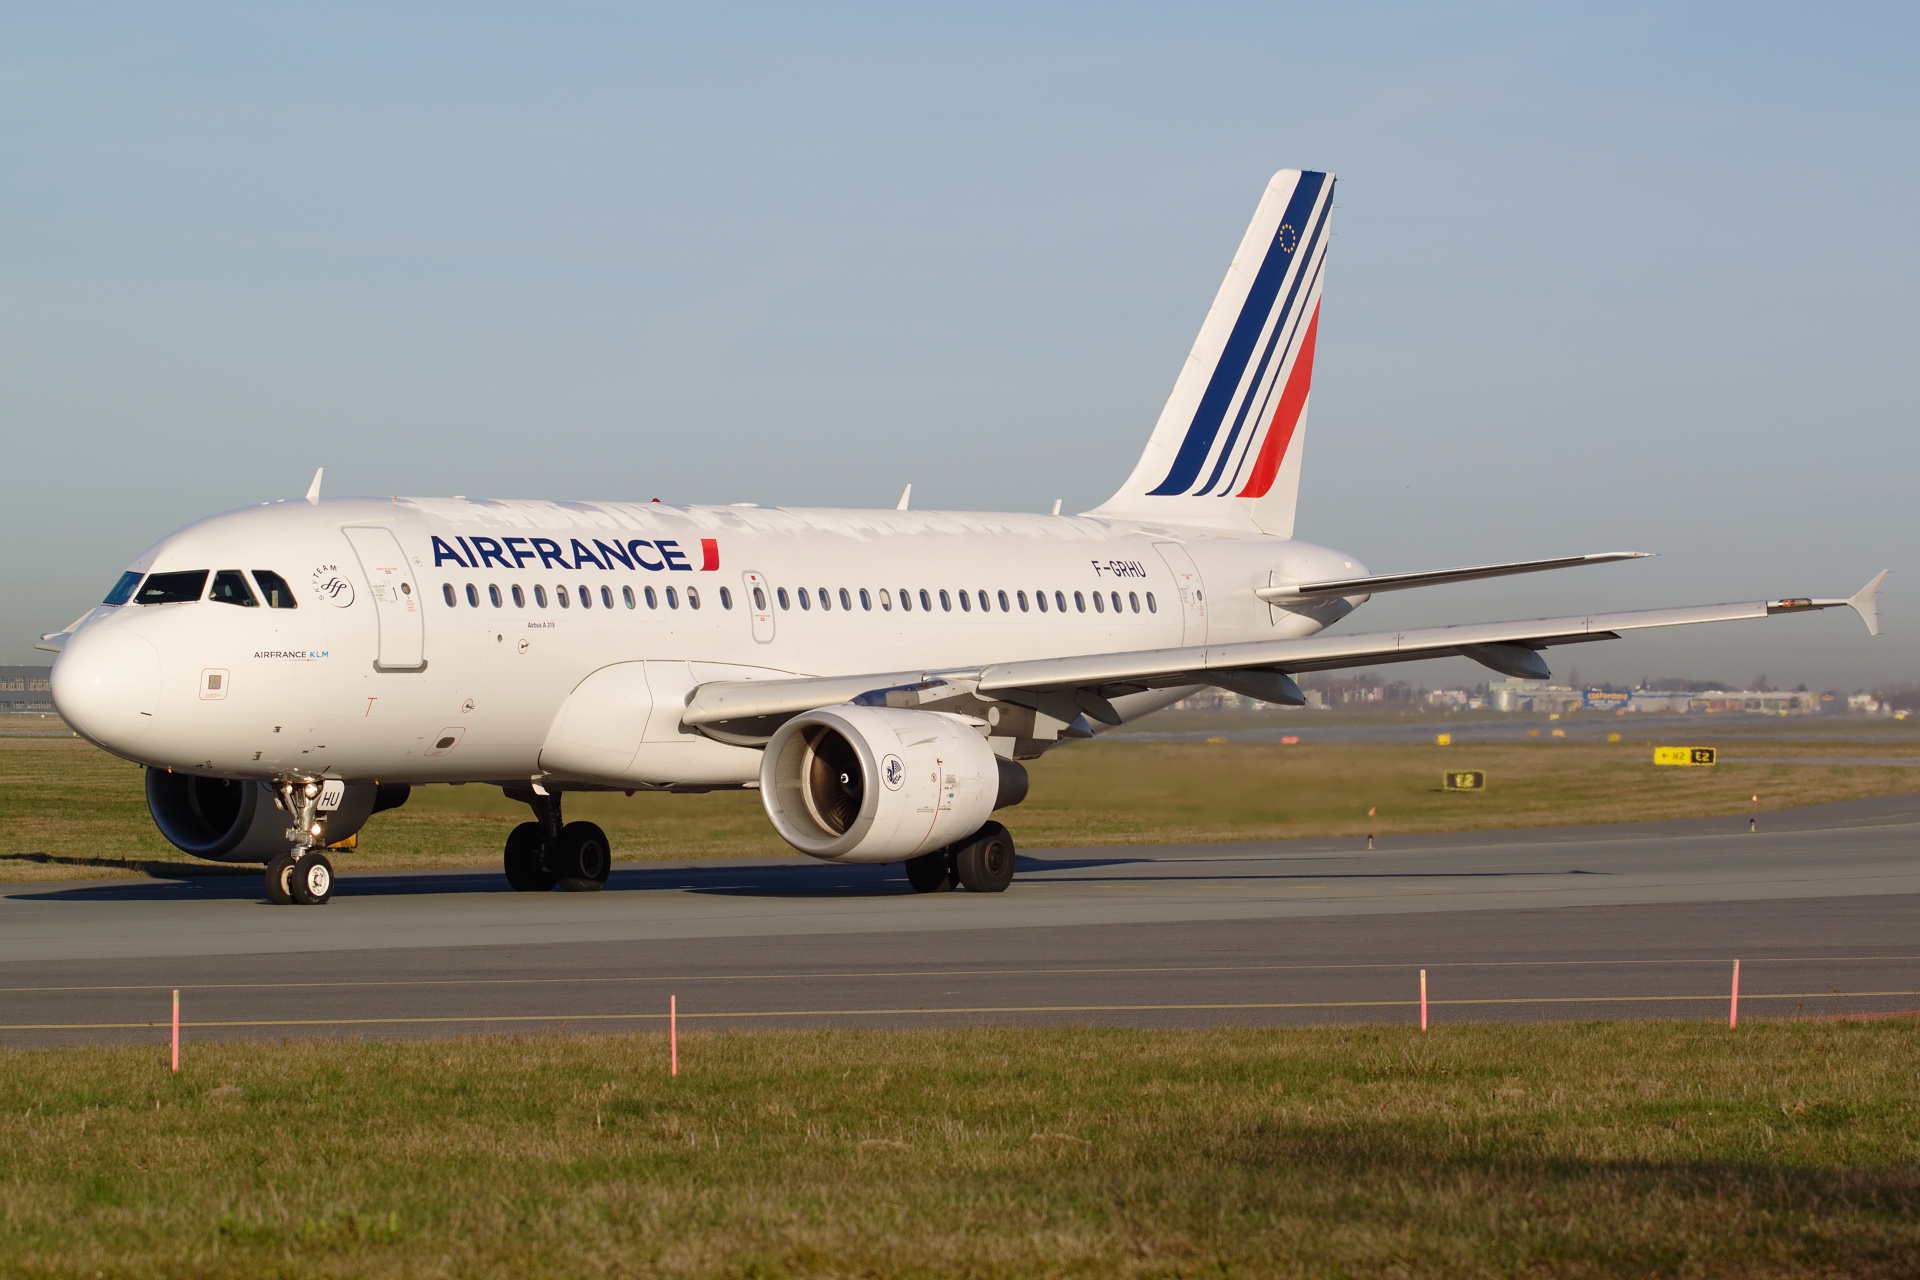 F-GRHU (new livery) (Aircraft » EPWA Spotting » Airbus A319-100 » Air France)